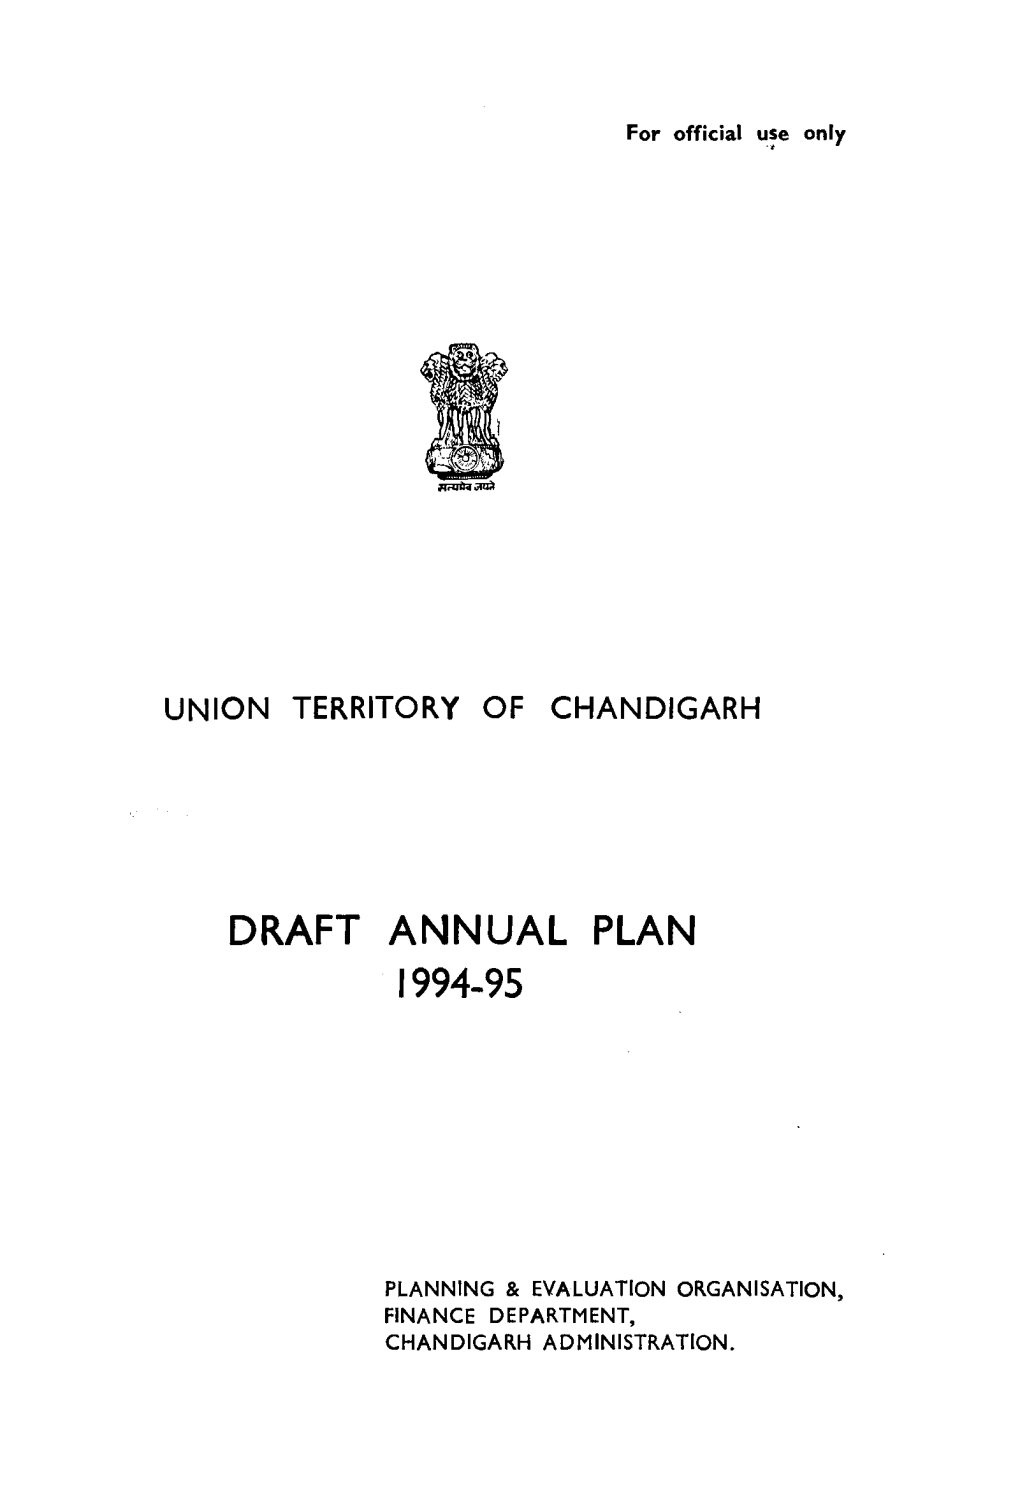 Draft Annual Plan 1994-95